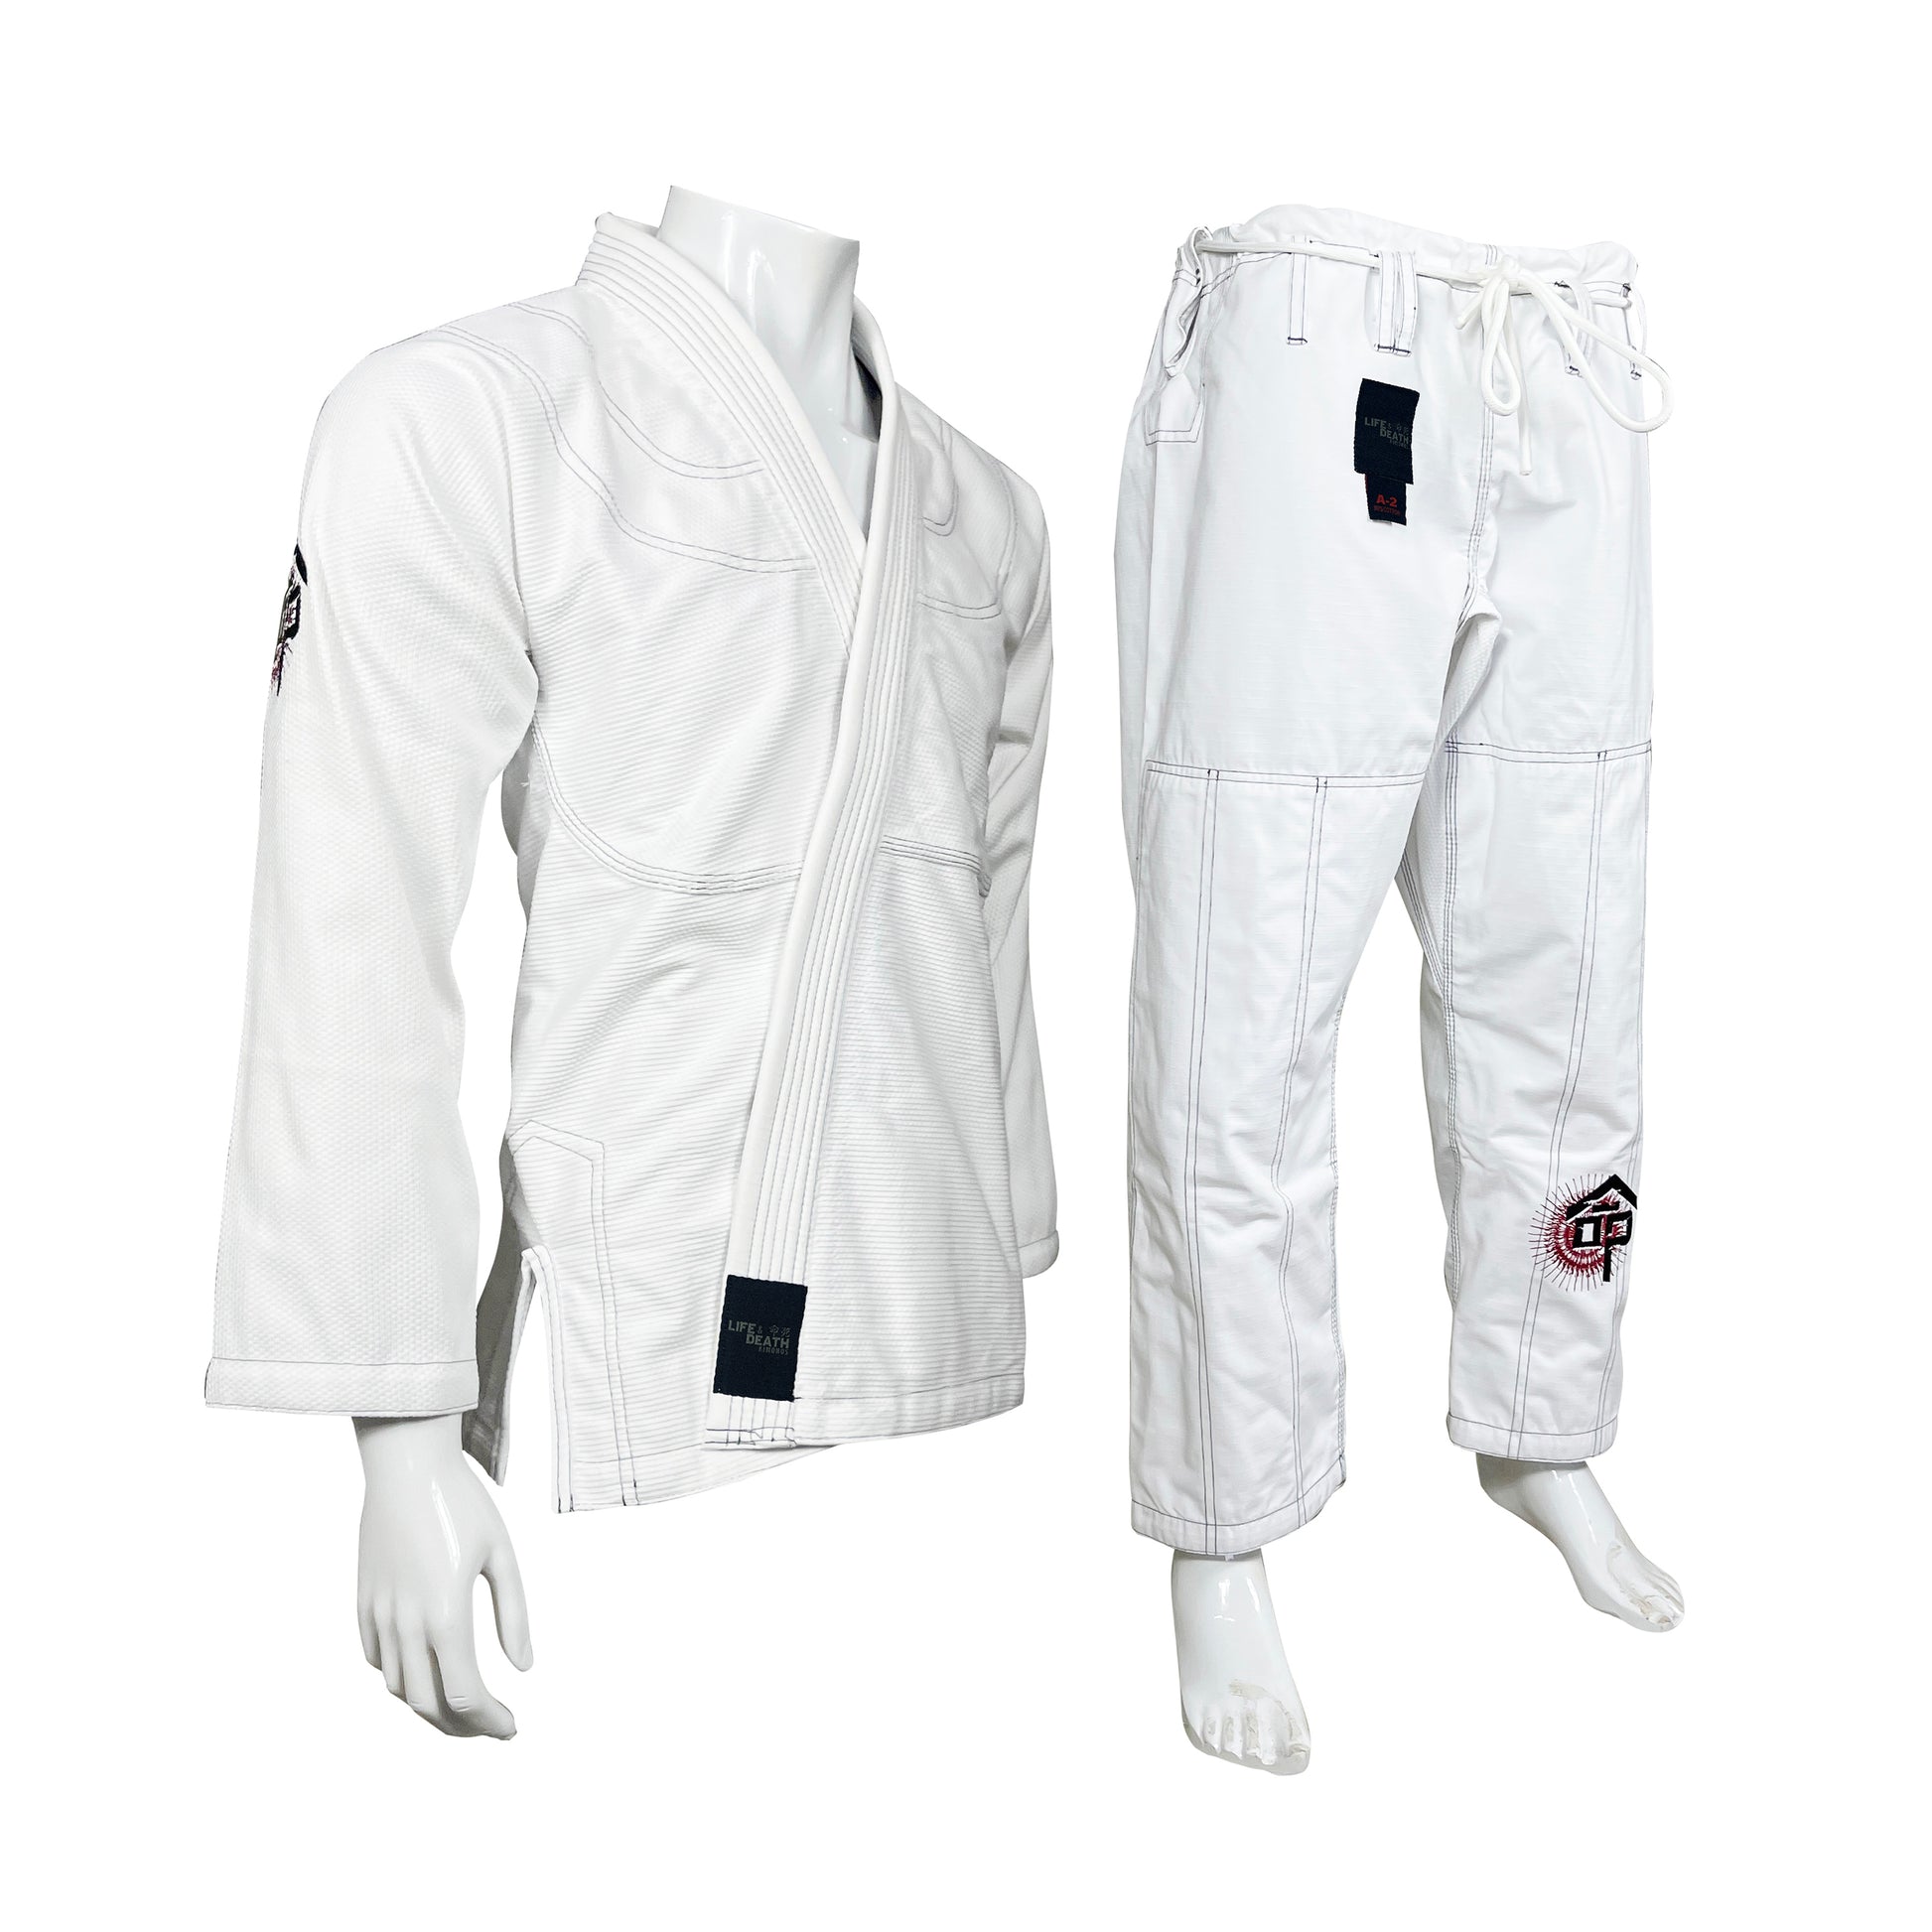 PFG Vital Brazilian Jiu-Jitsu Kimono BJJ Gi Uniform Gi - Kids Adults Unisex  (White Belt Included)